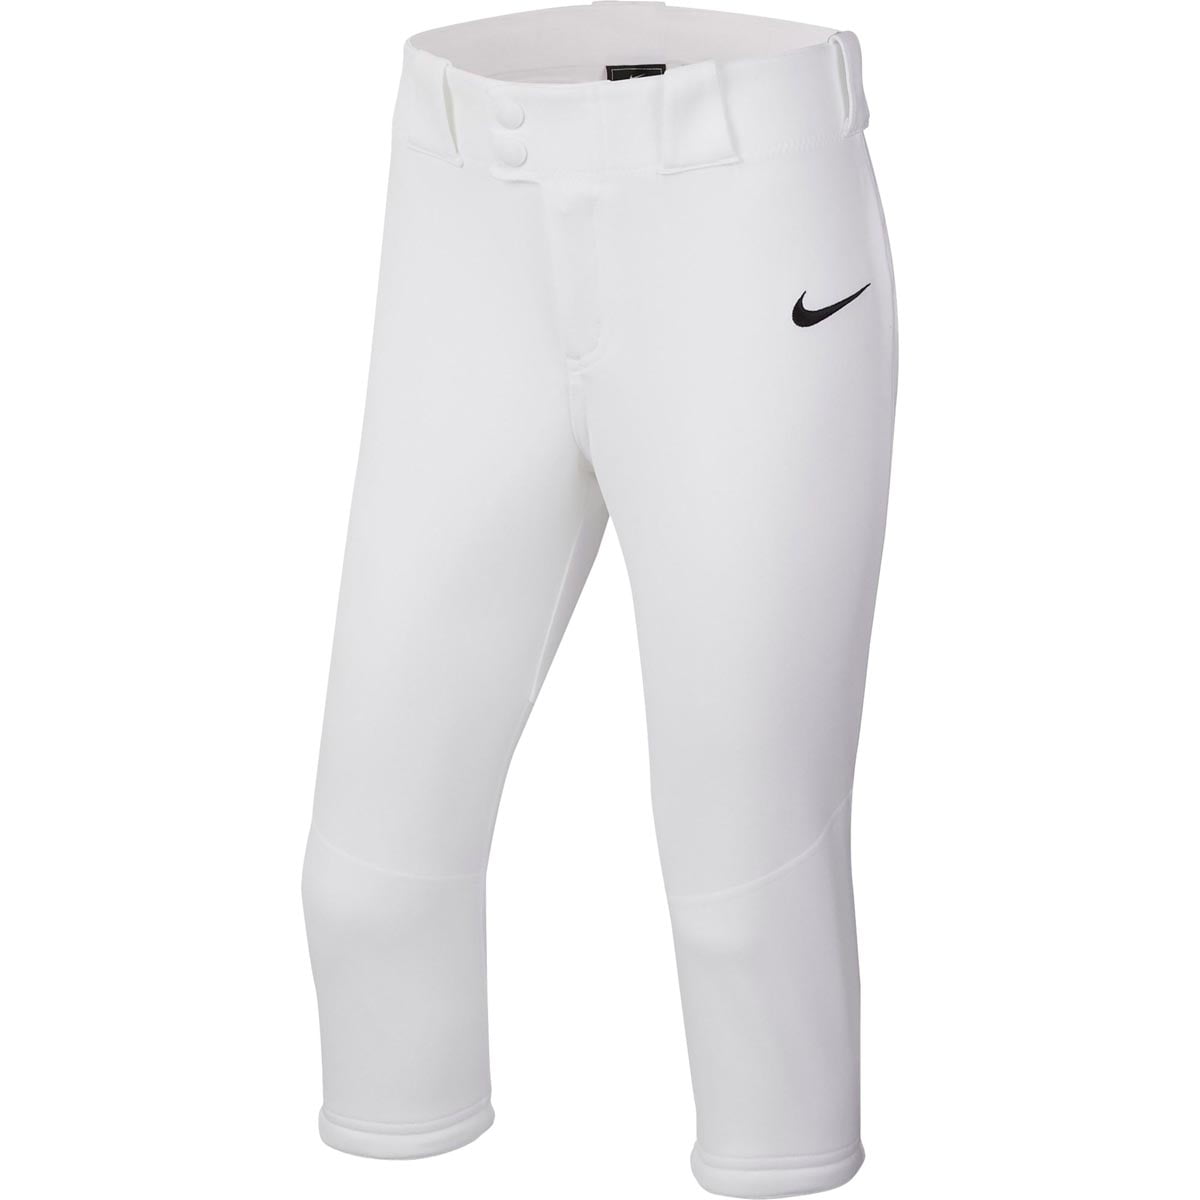 Nike Vapor Select Women's 3/4-Length Softball Pants.